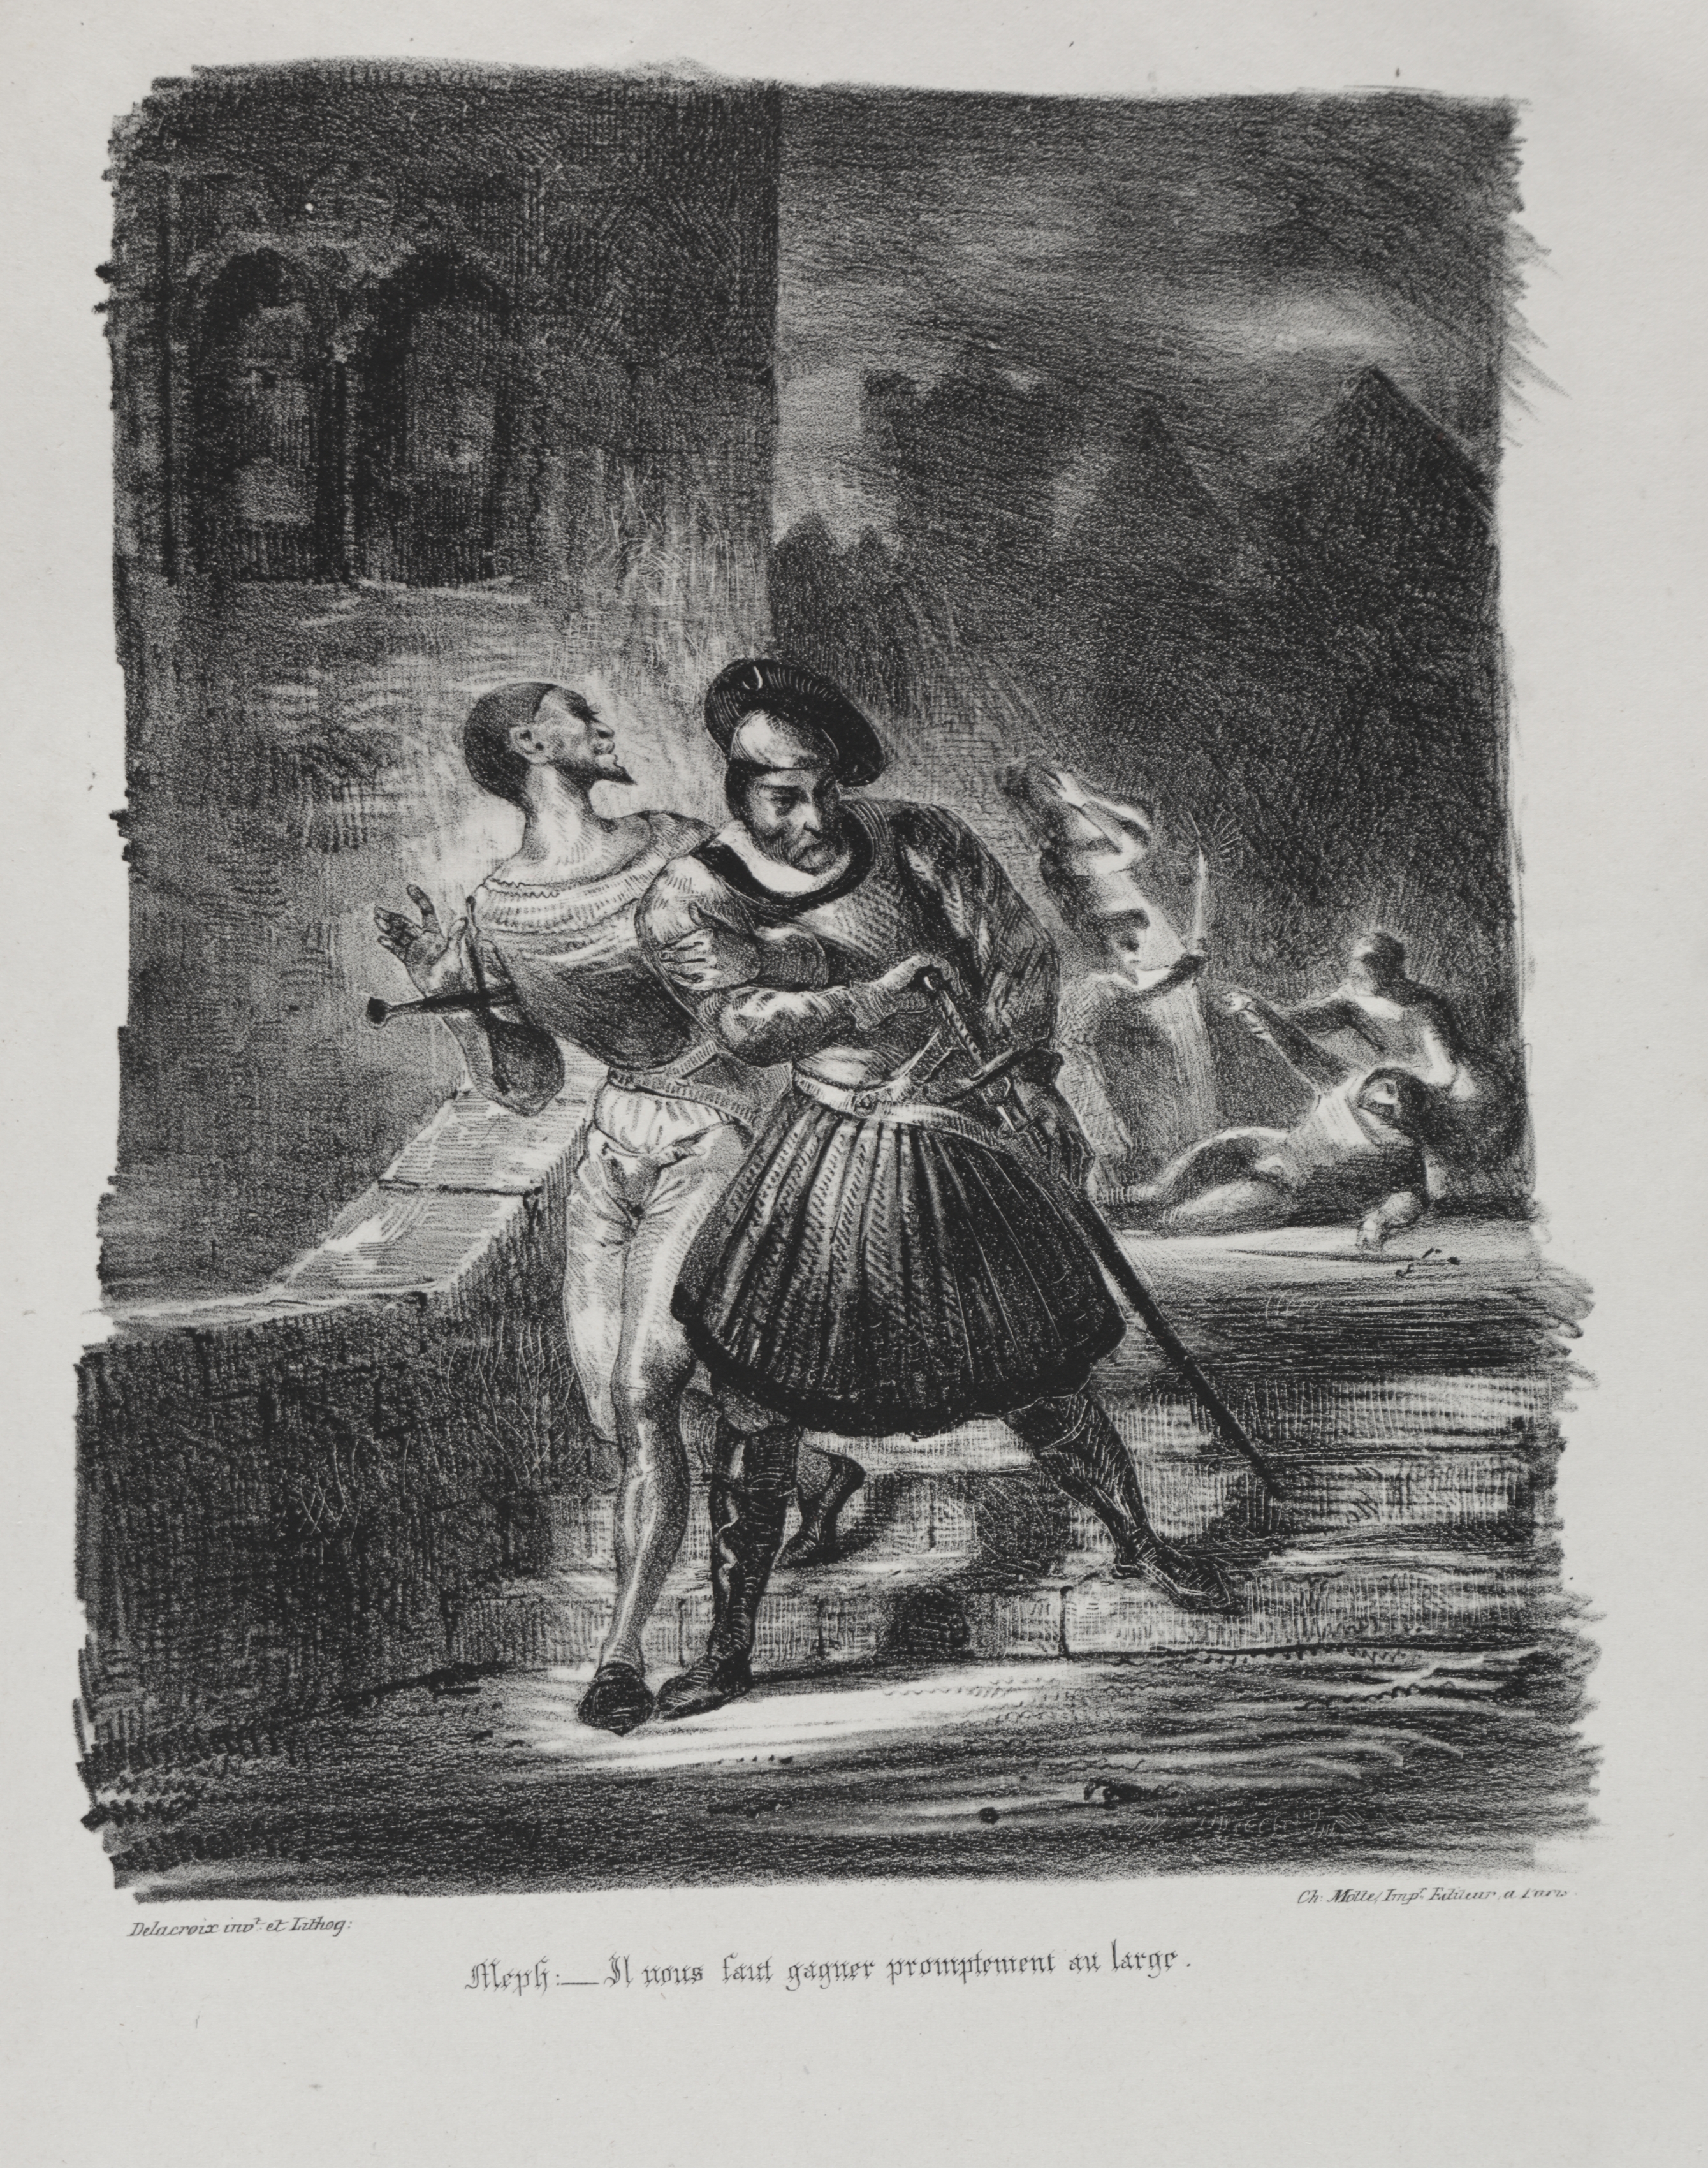 Illustrations for Faust:  Méphistophélés and Faust flee after the duel